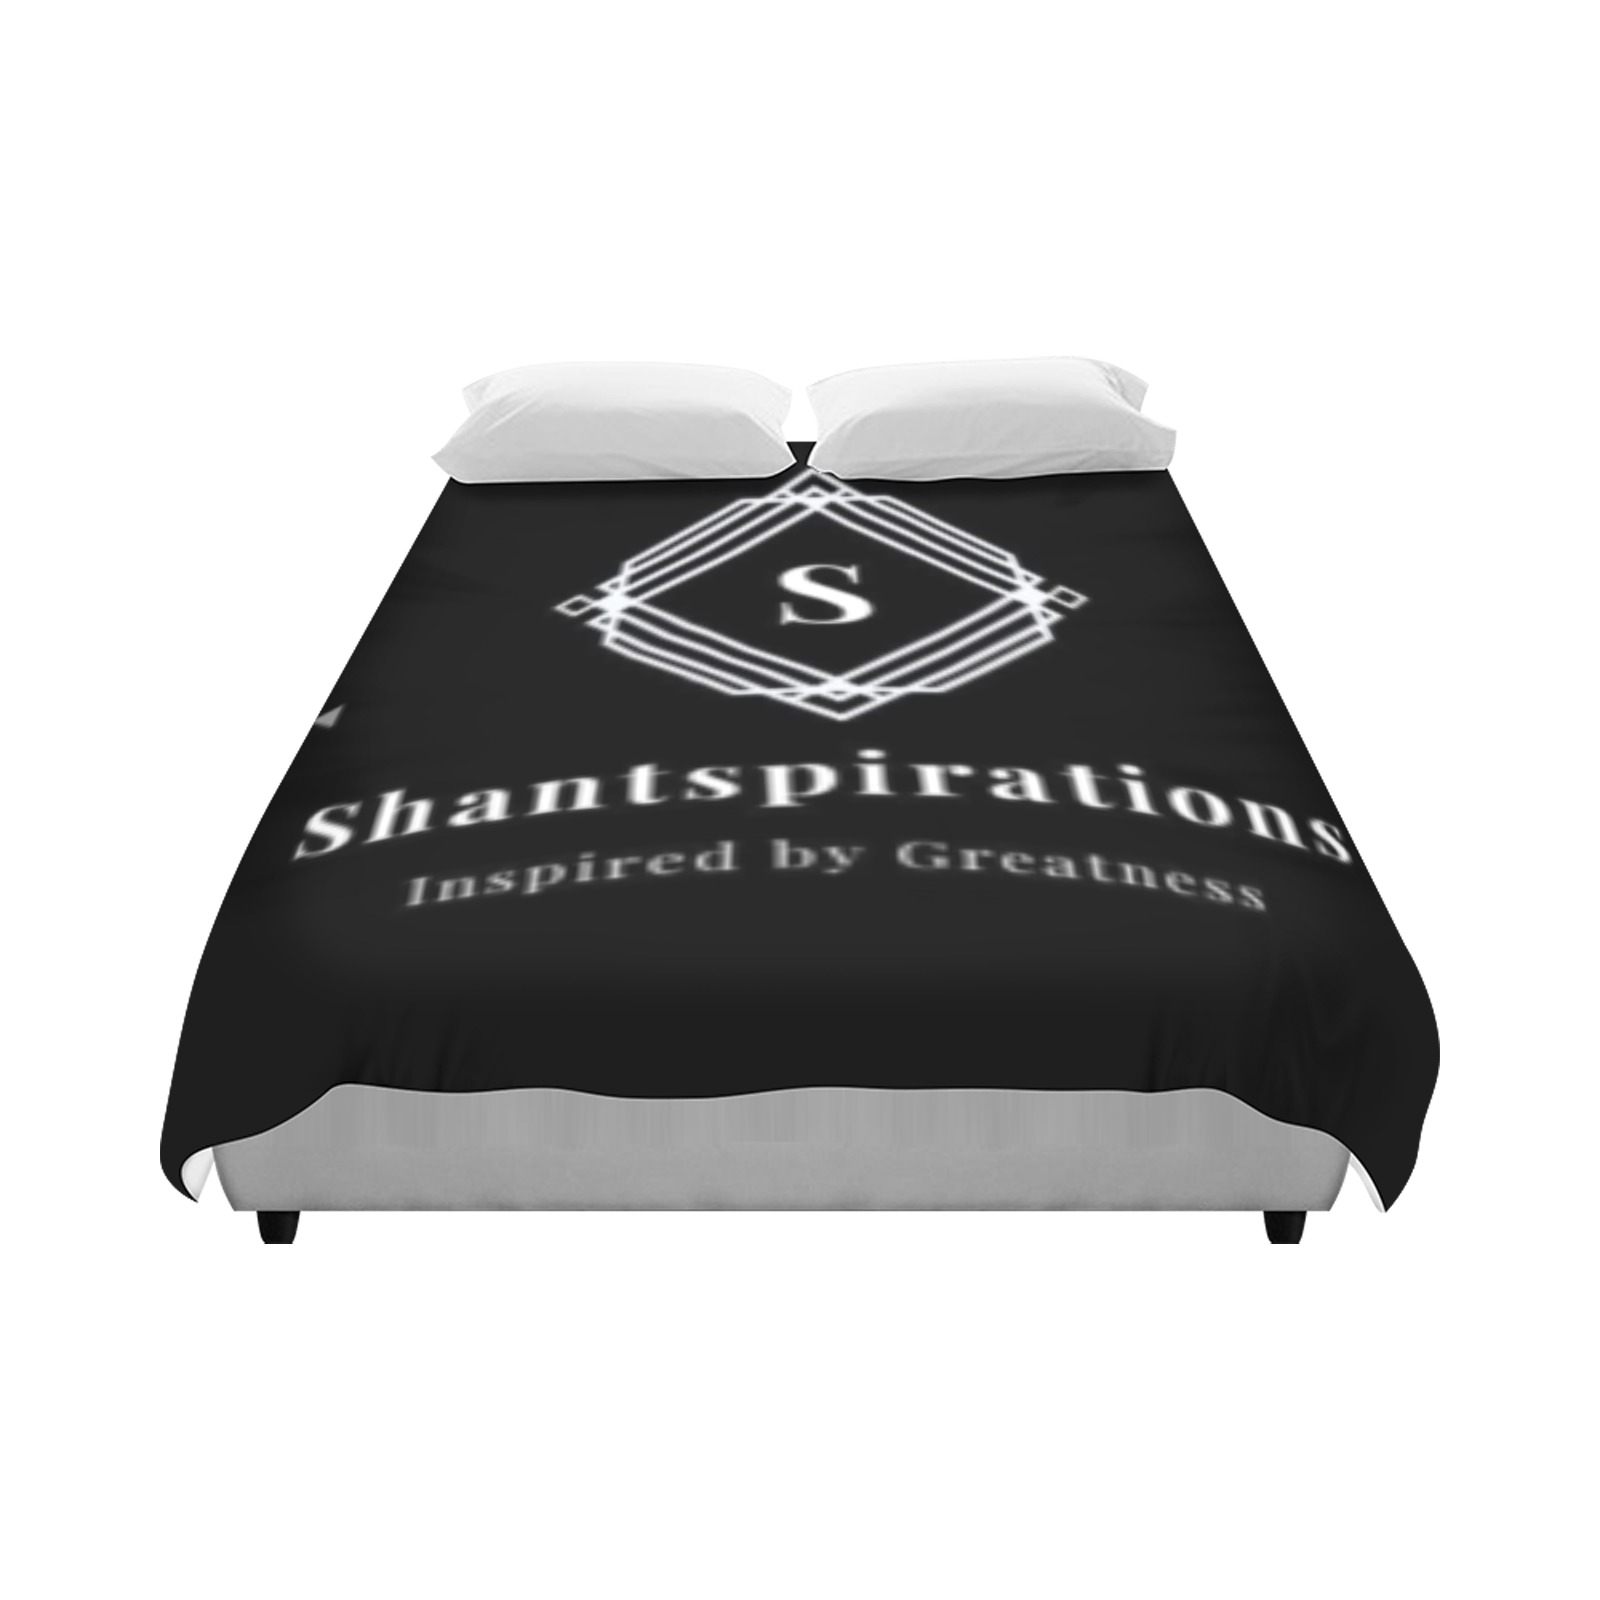 Shantspirations Bedding Duvet Cover 86"x70" ( All-over-print)